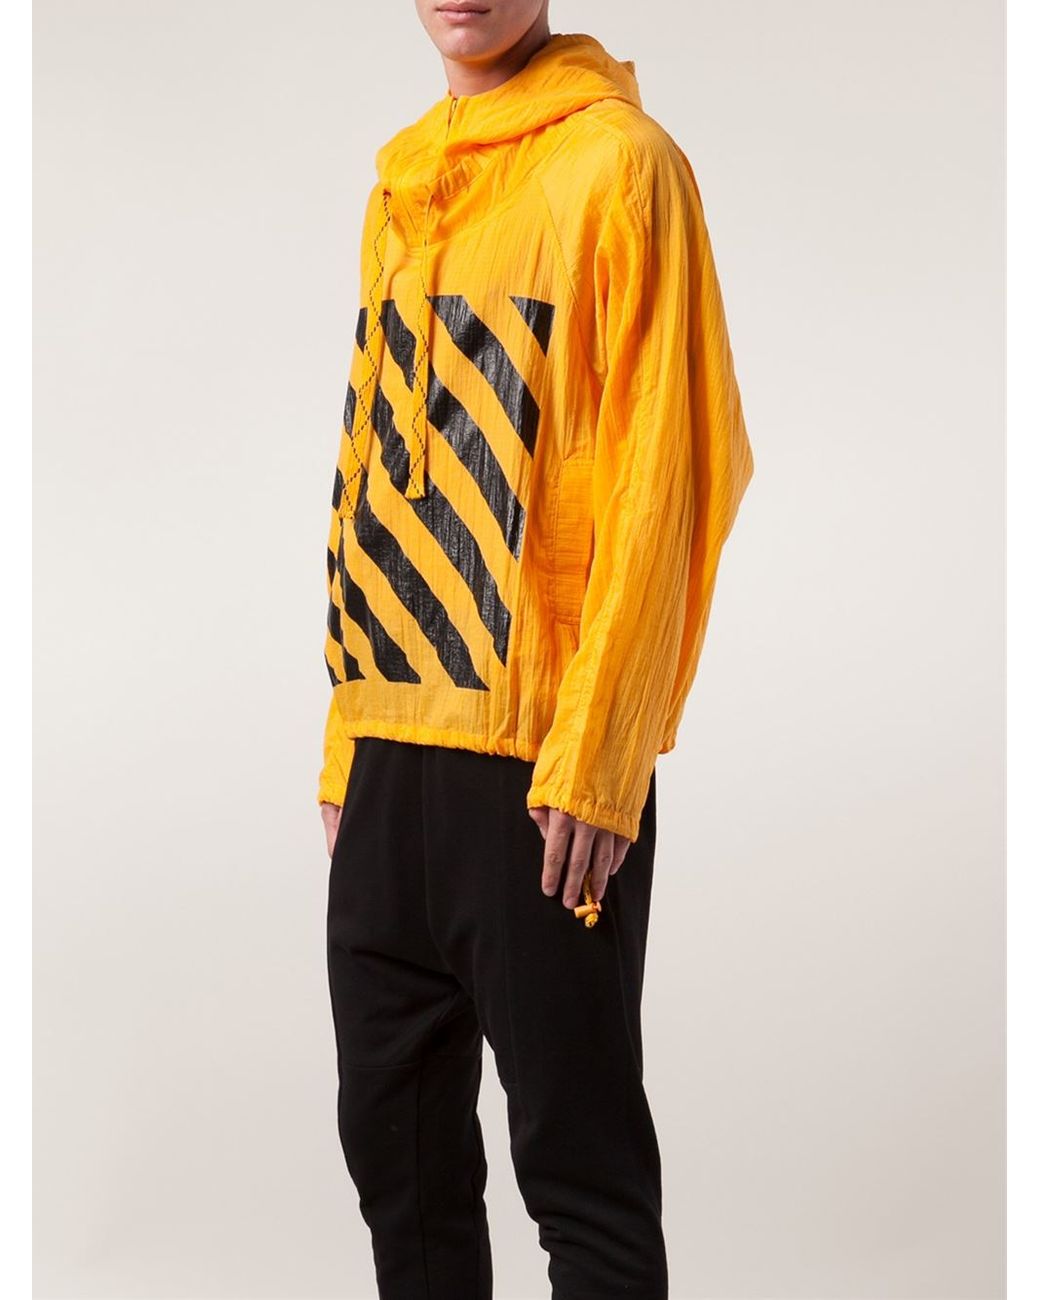 Off-White c/o Virgil Abloh Windbreaker Jacket in Yellow for Men | Lyst